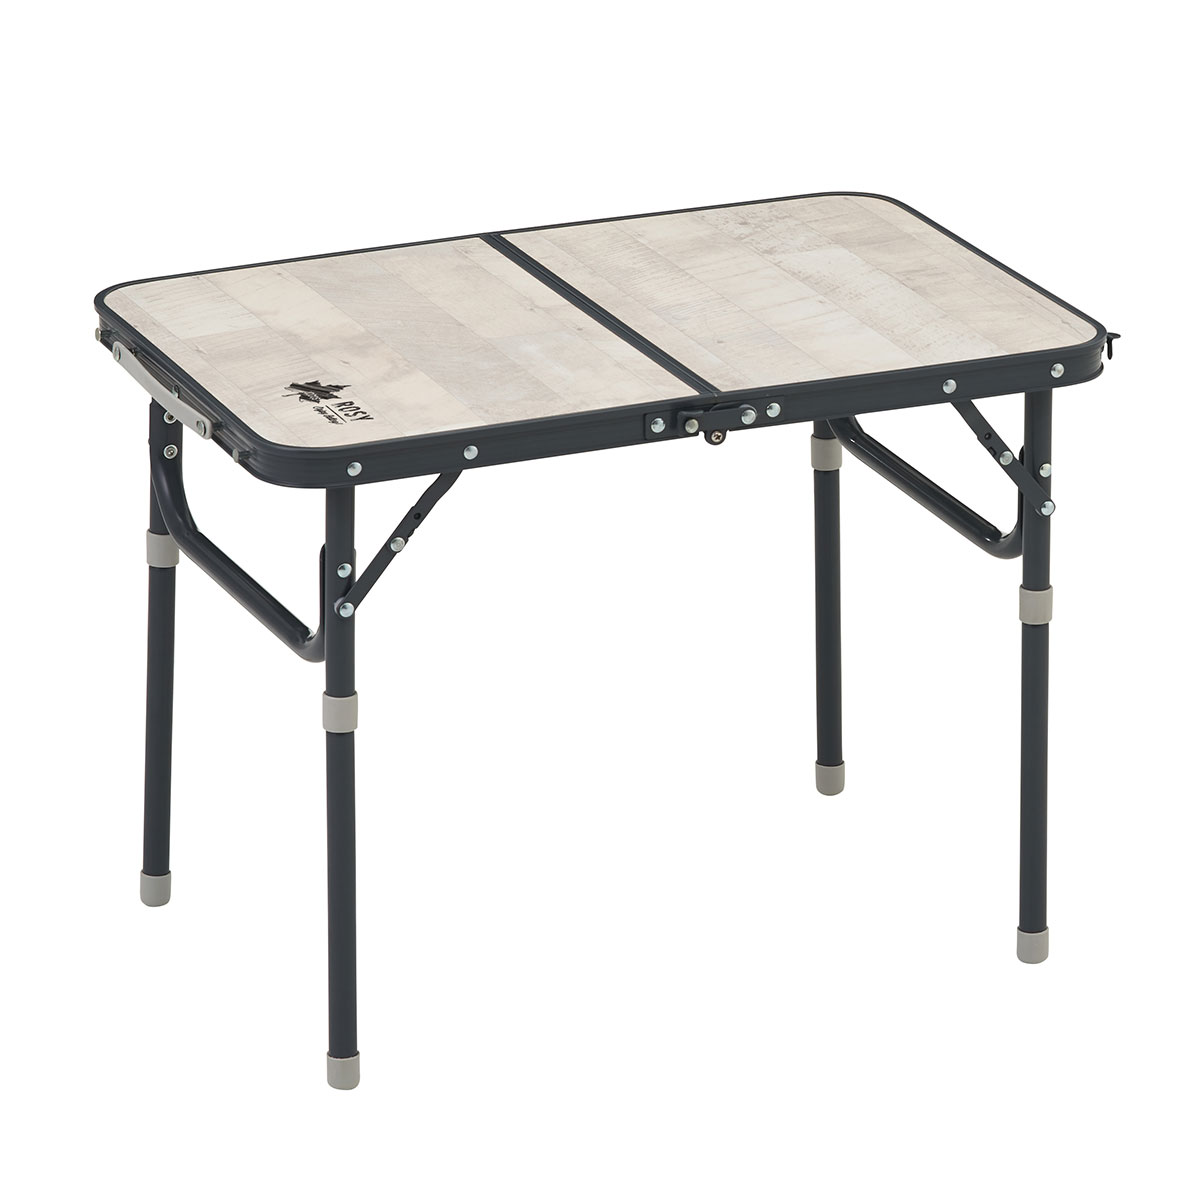 ROSY ファミリーテーブル 6040|ギア|家具|テーブル|製品情報|ロゴス